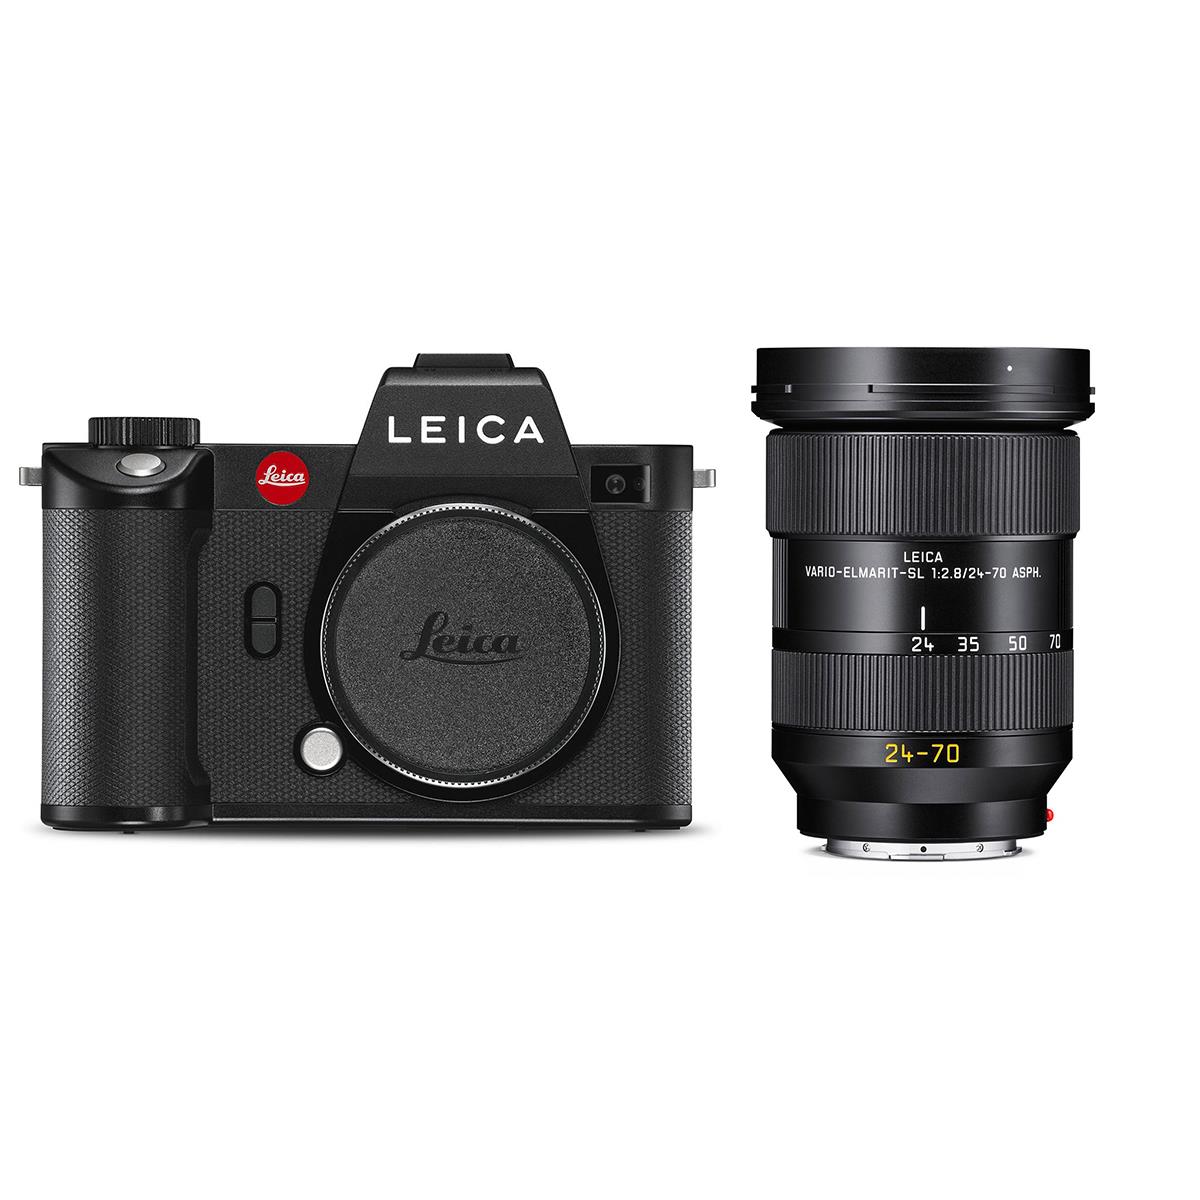 Image of Leica SL2 Mirrorless Camera with Vario-Elmarit-SL 24-70mm f/2.8 Lens